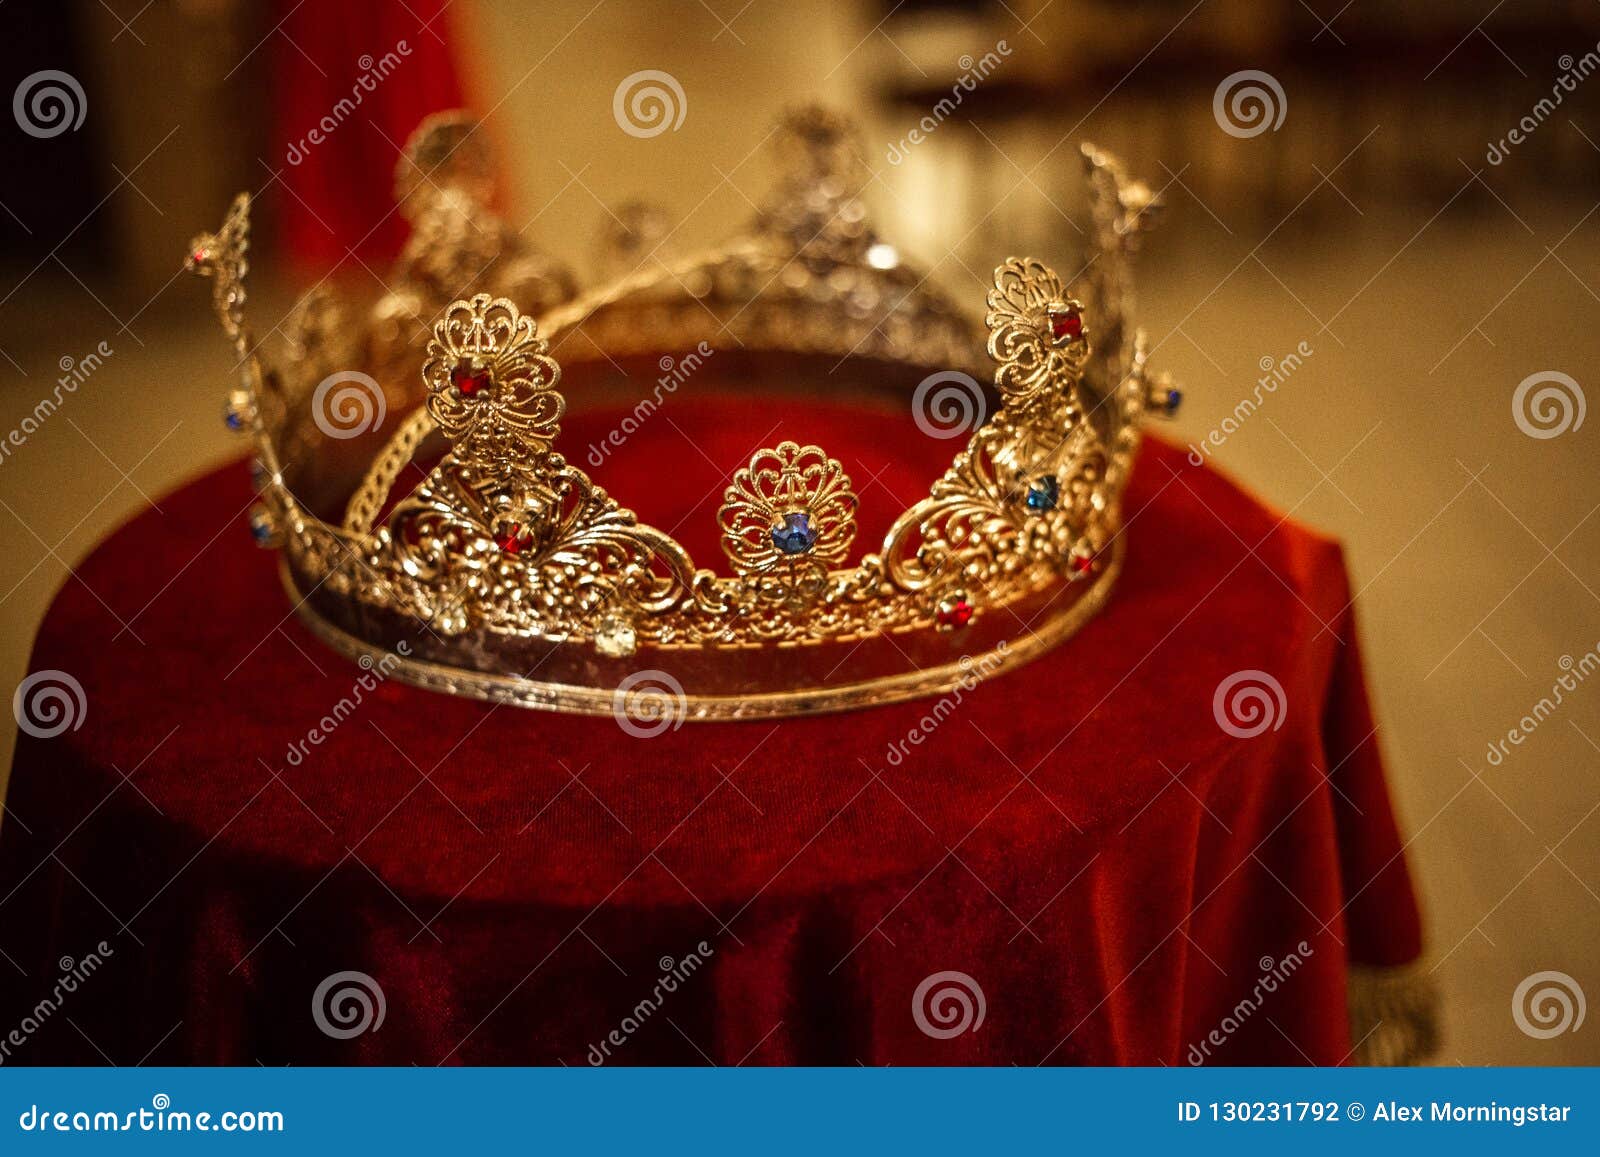 Beautiful Queen King Crown Fantasy Medieval Period Wedding Crown Stock